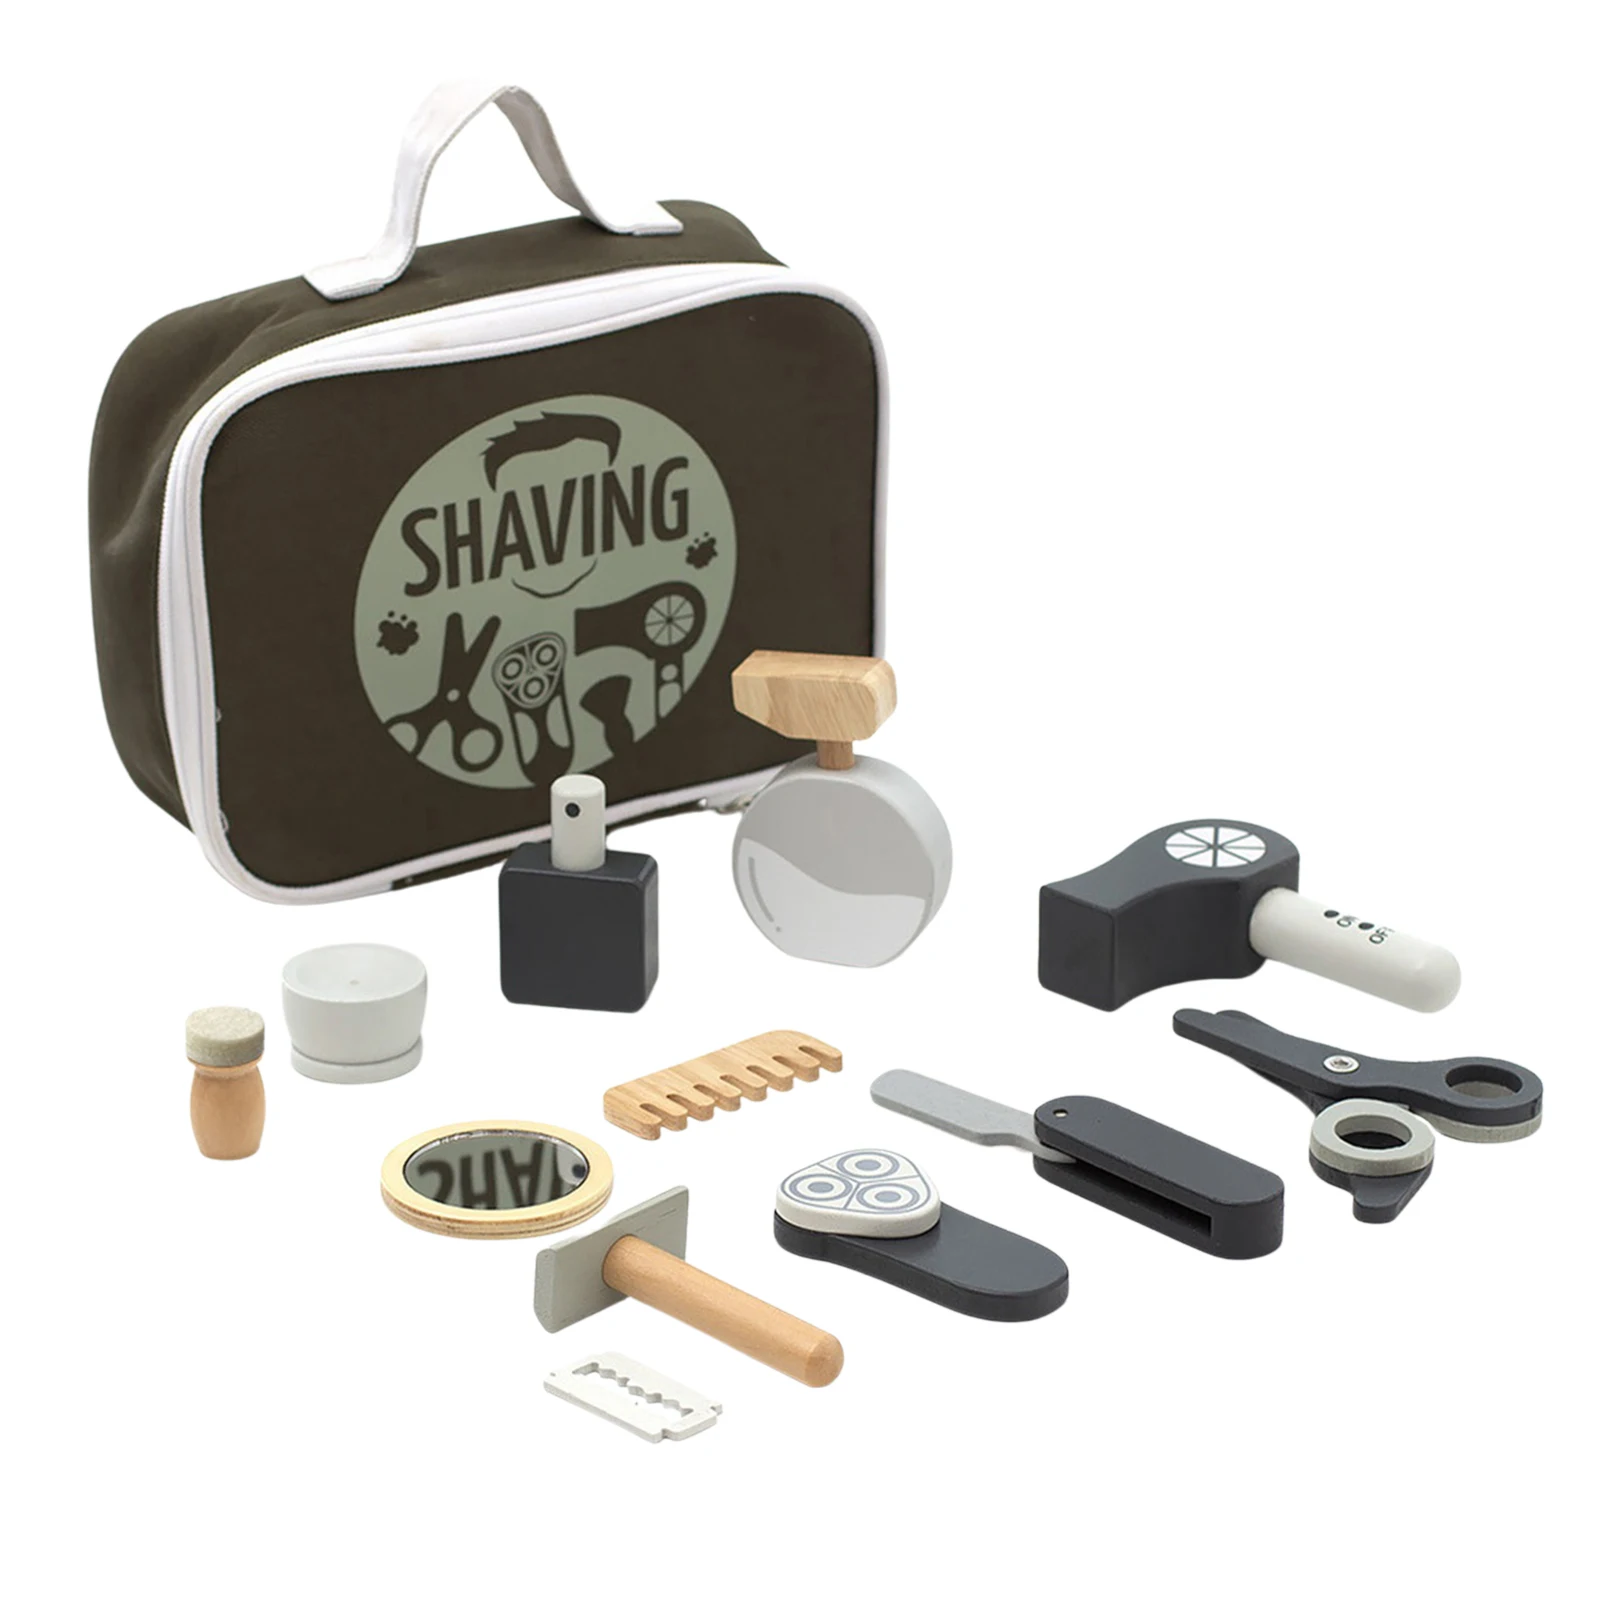 

3in1 Hair Cut Dressing Up Set Toddler Makeup Kids Shaving Kit for Boys - Portable Pretend Play Beauty Set Hair Stylist Kit